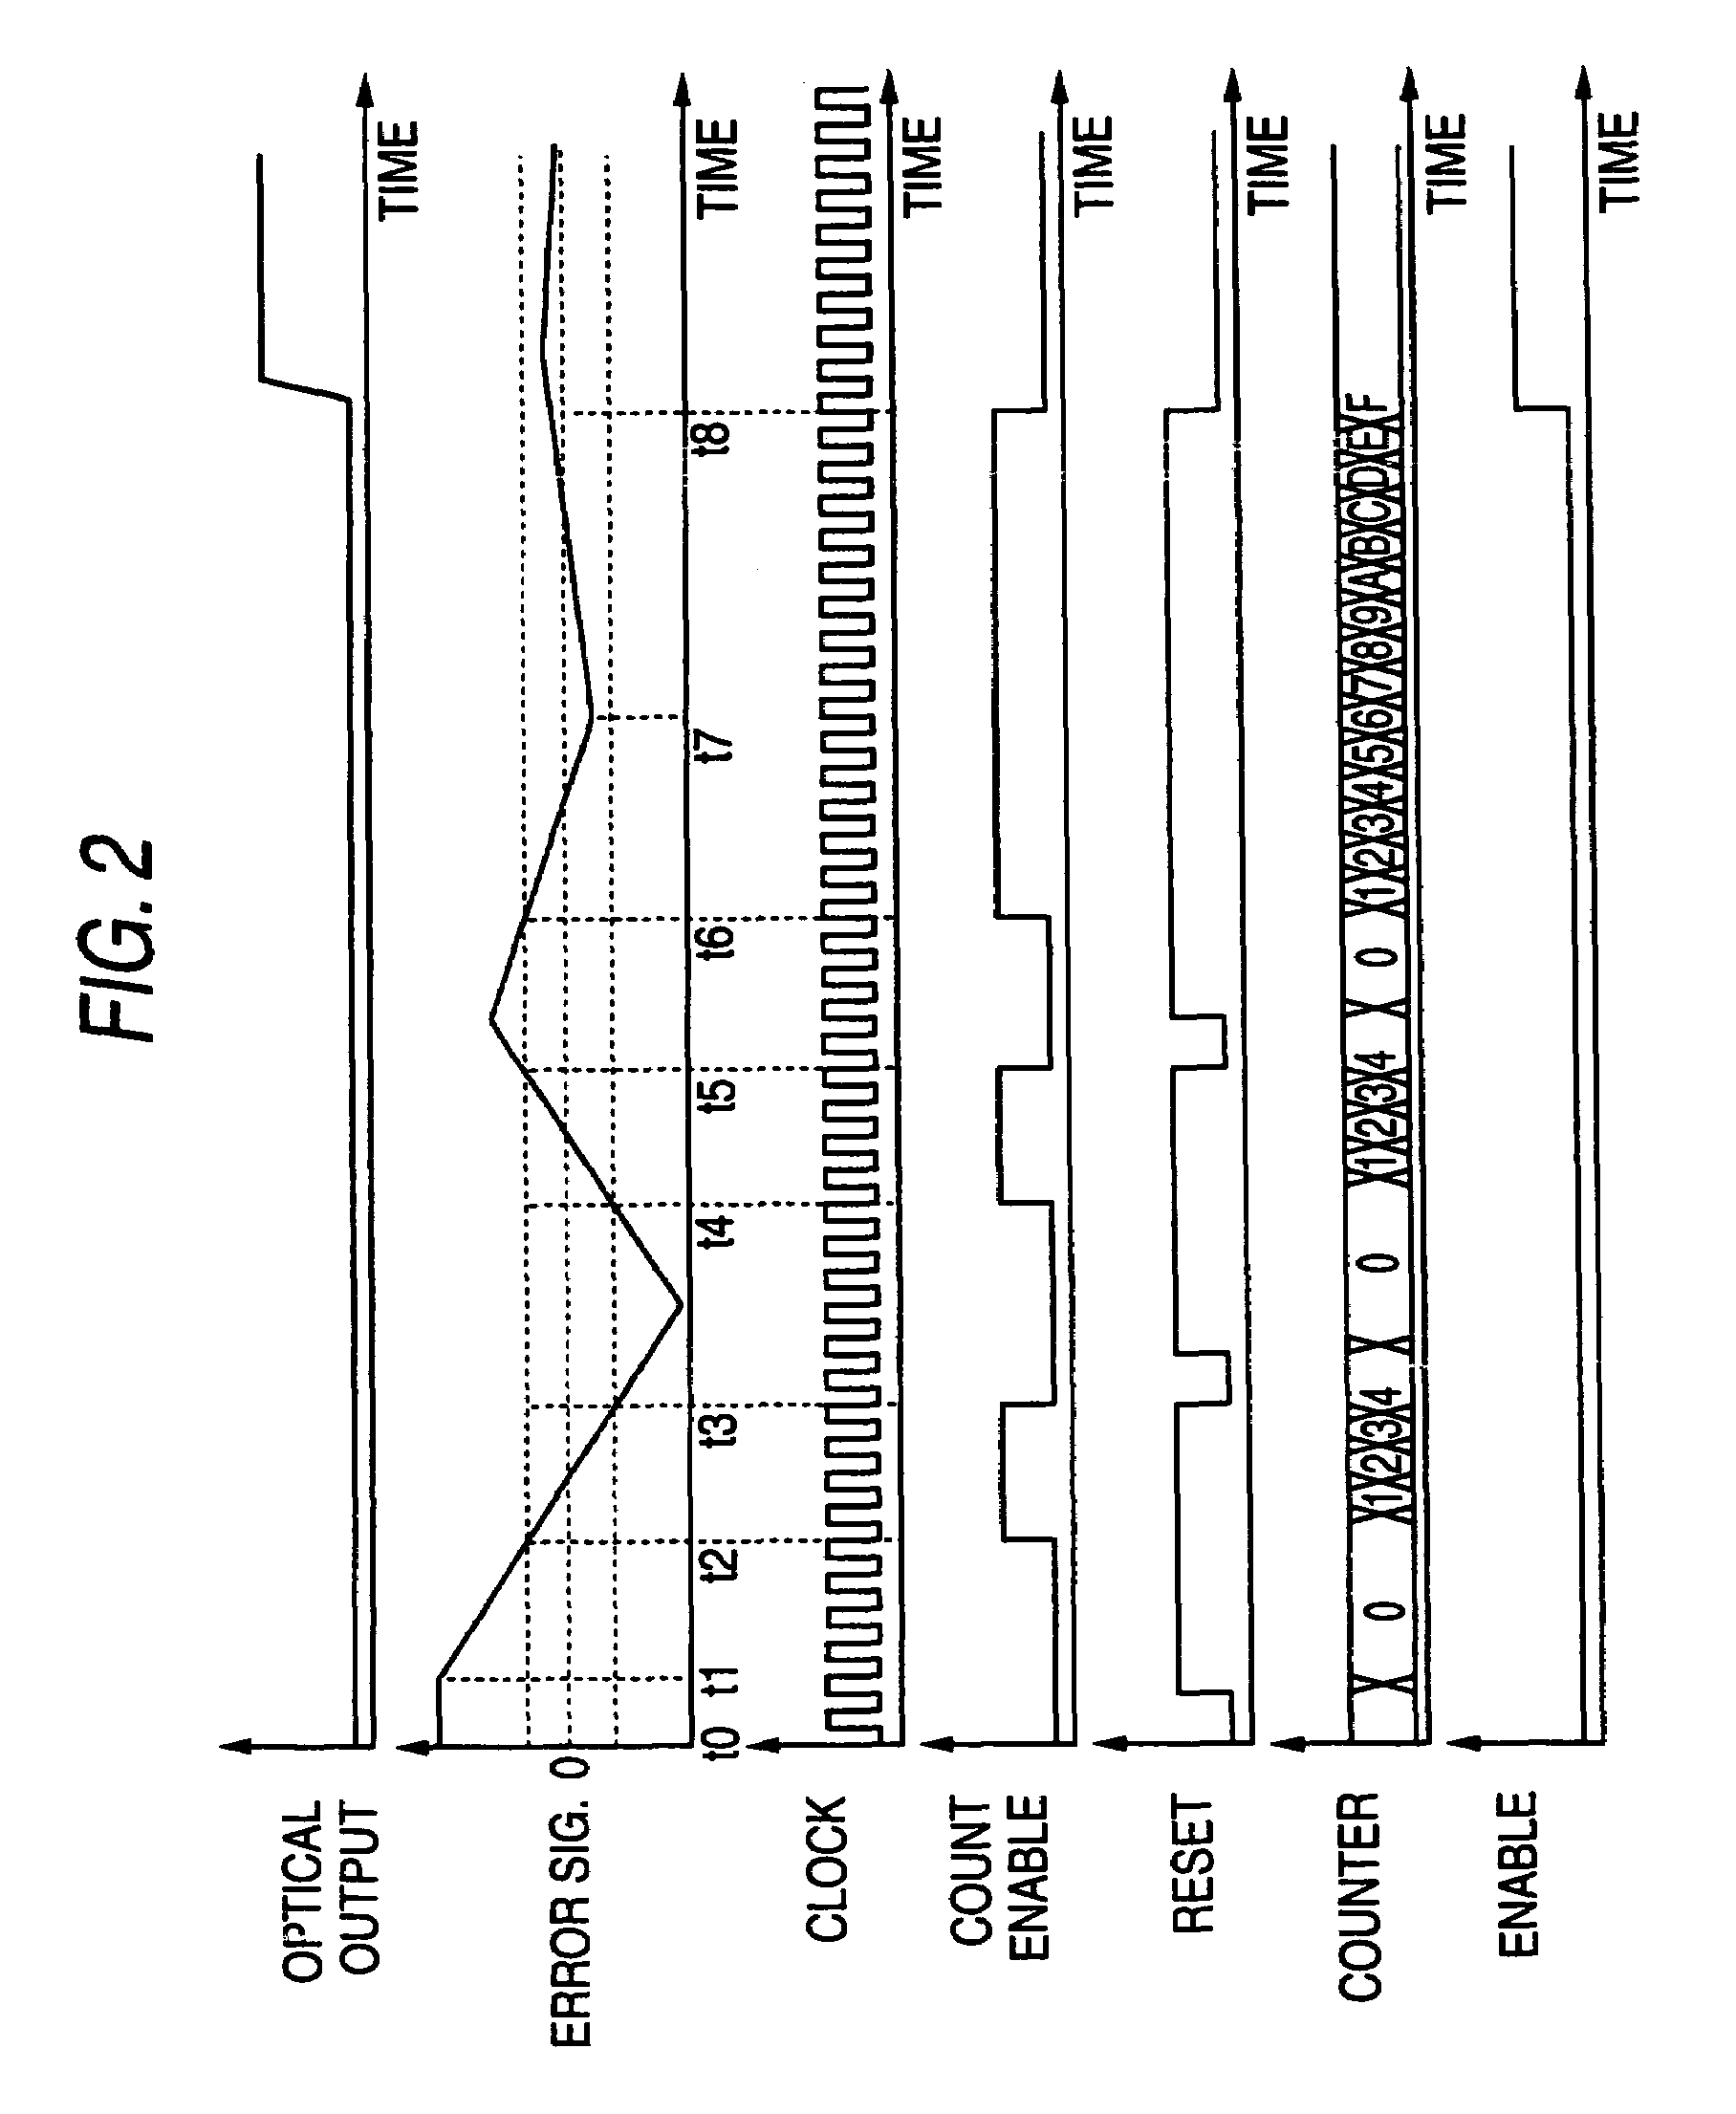 Optical transmitter